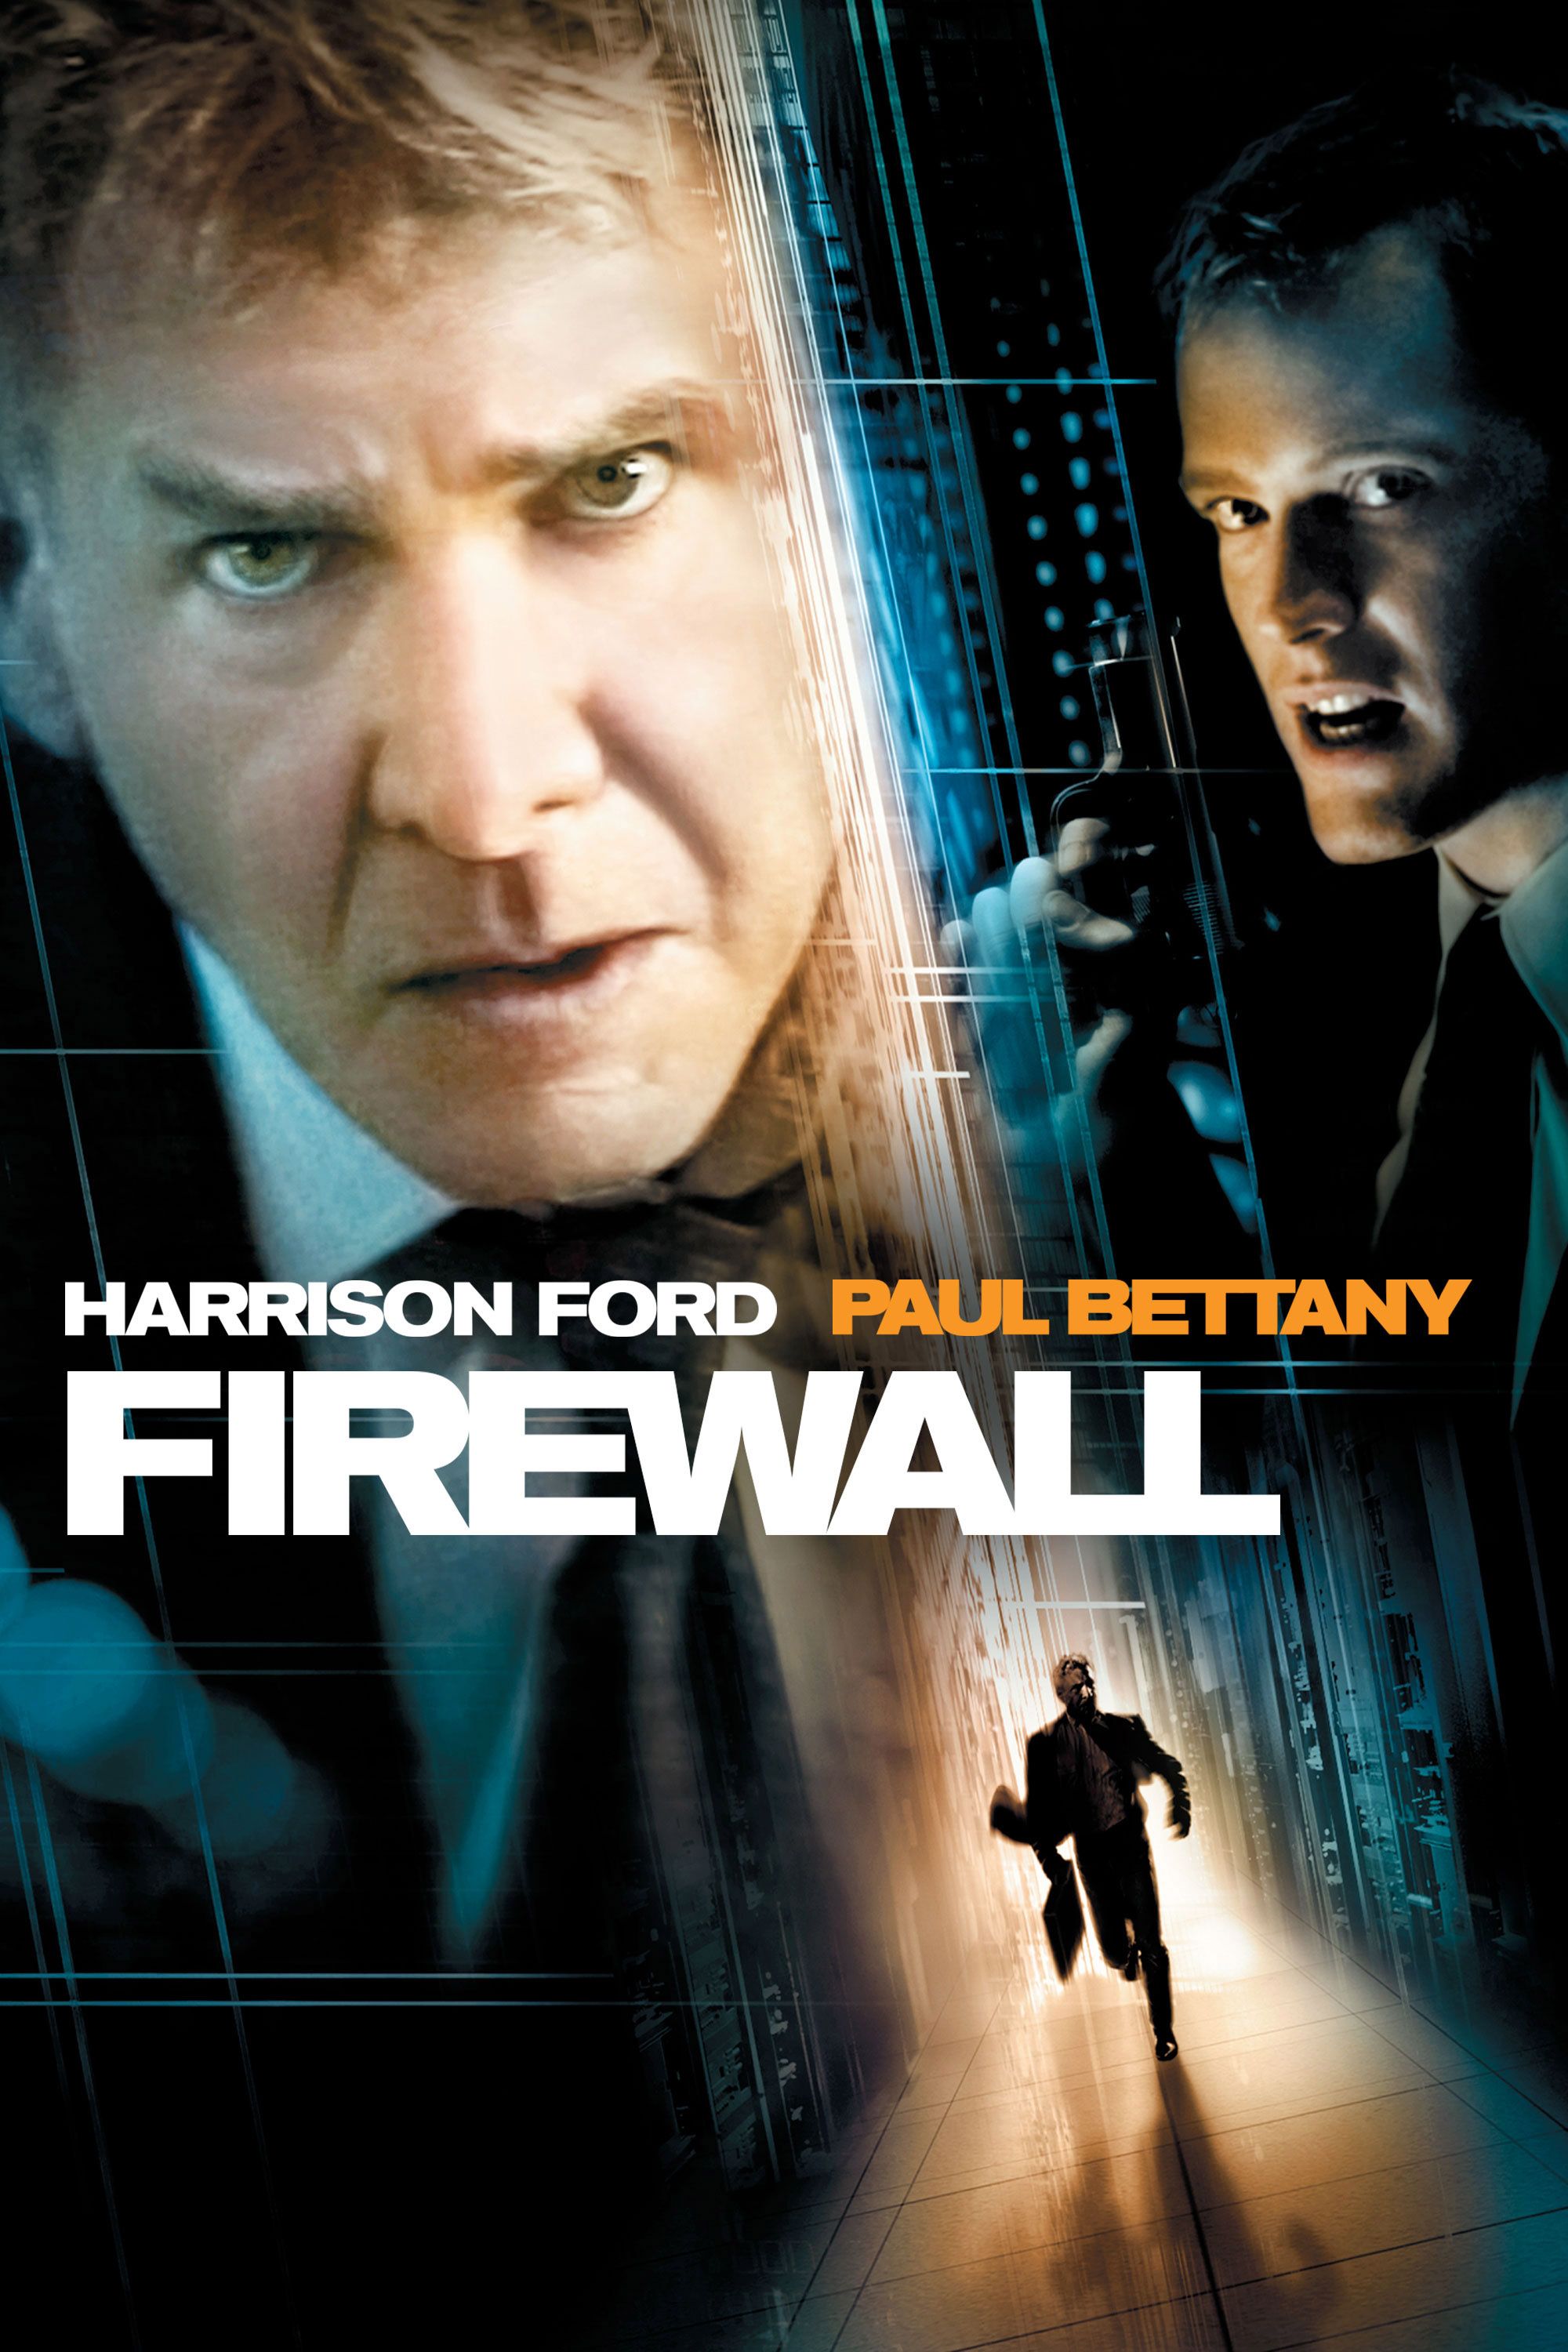 firewall movie